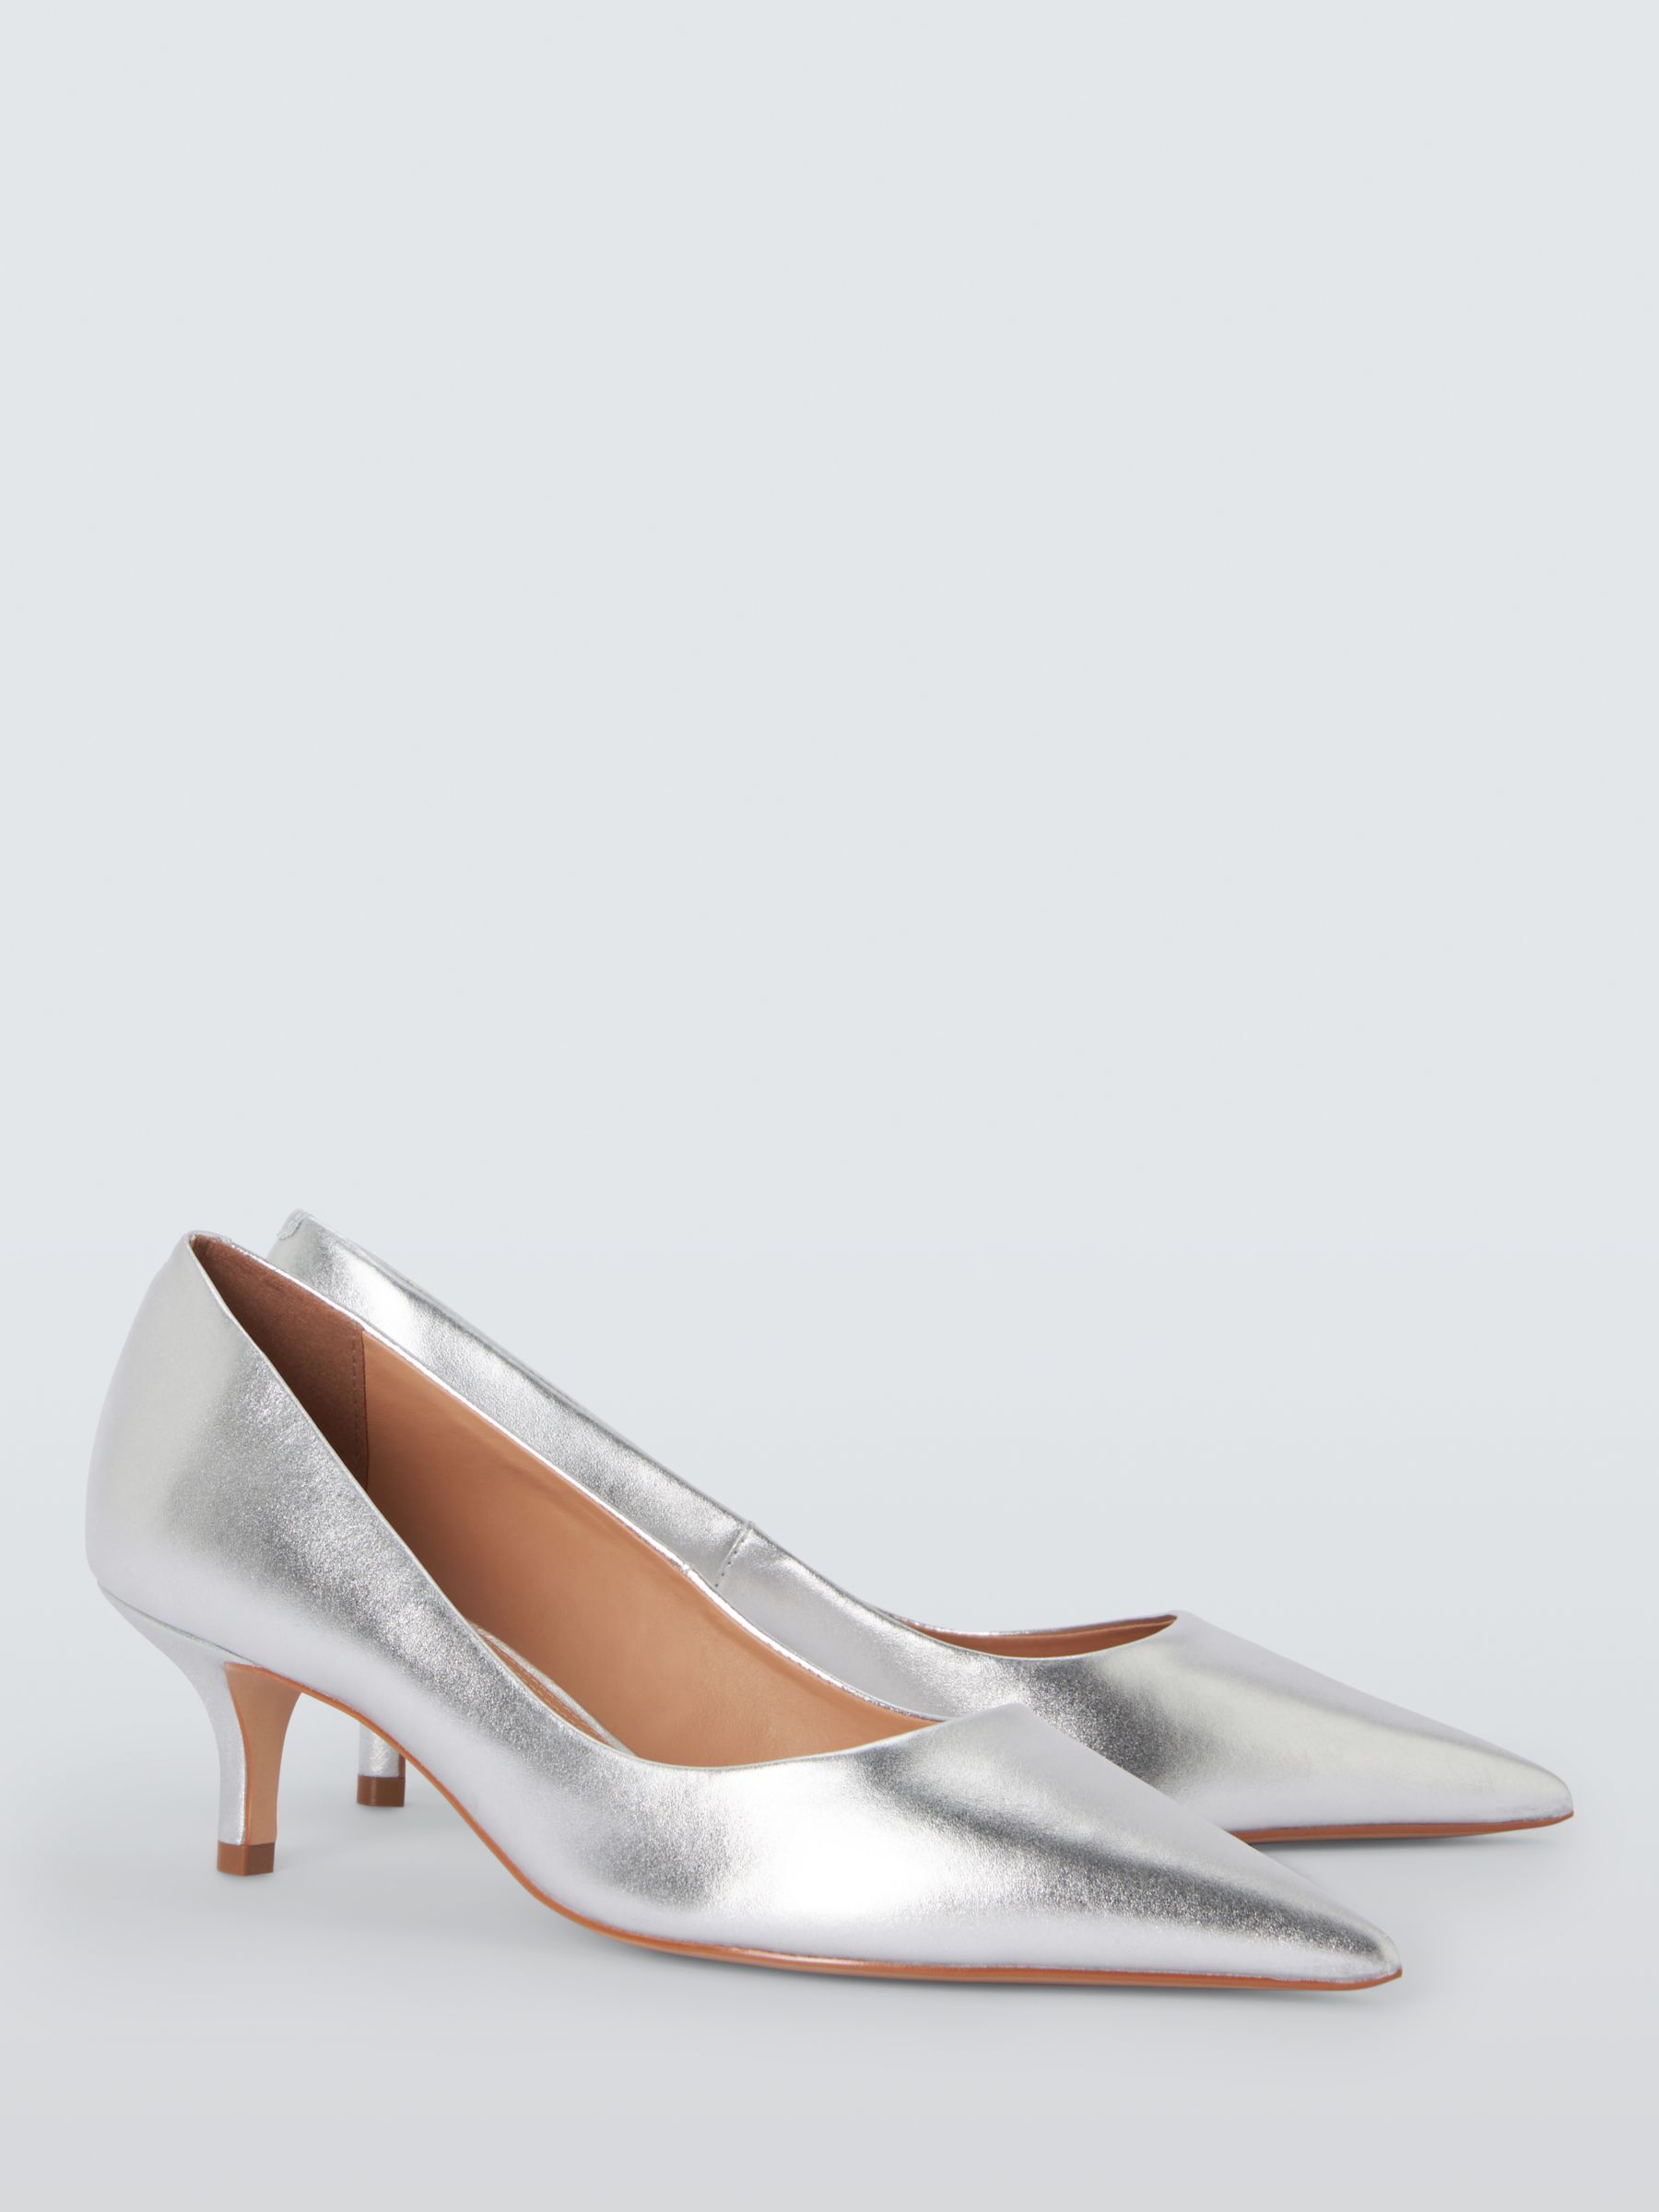 John Lewis Alabama Leather Kitten Heel Pointed Court Shoes, Silver, 8